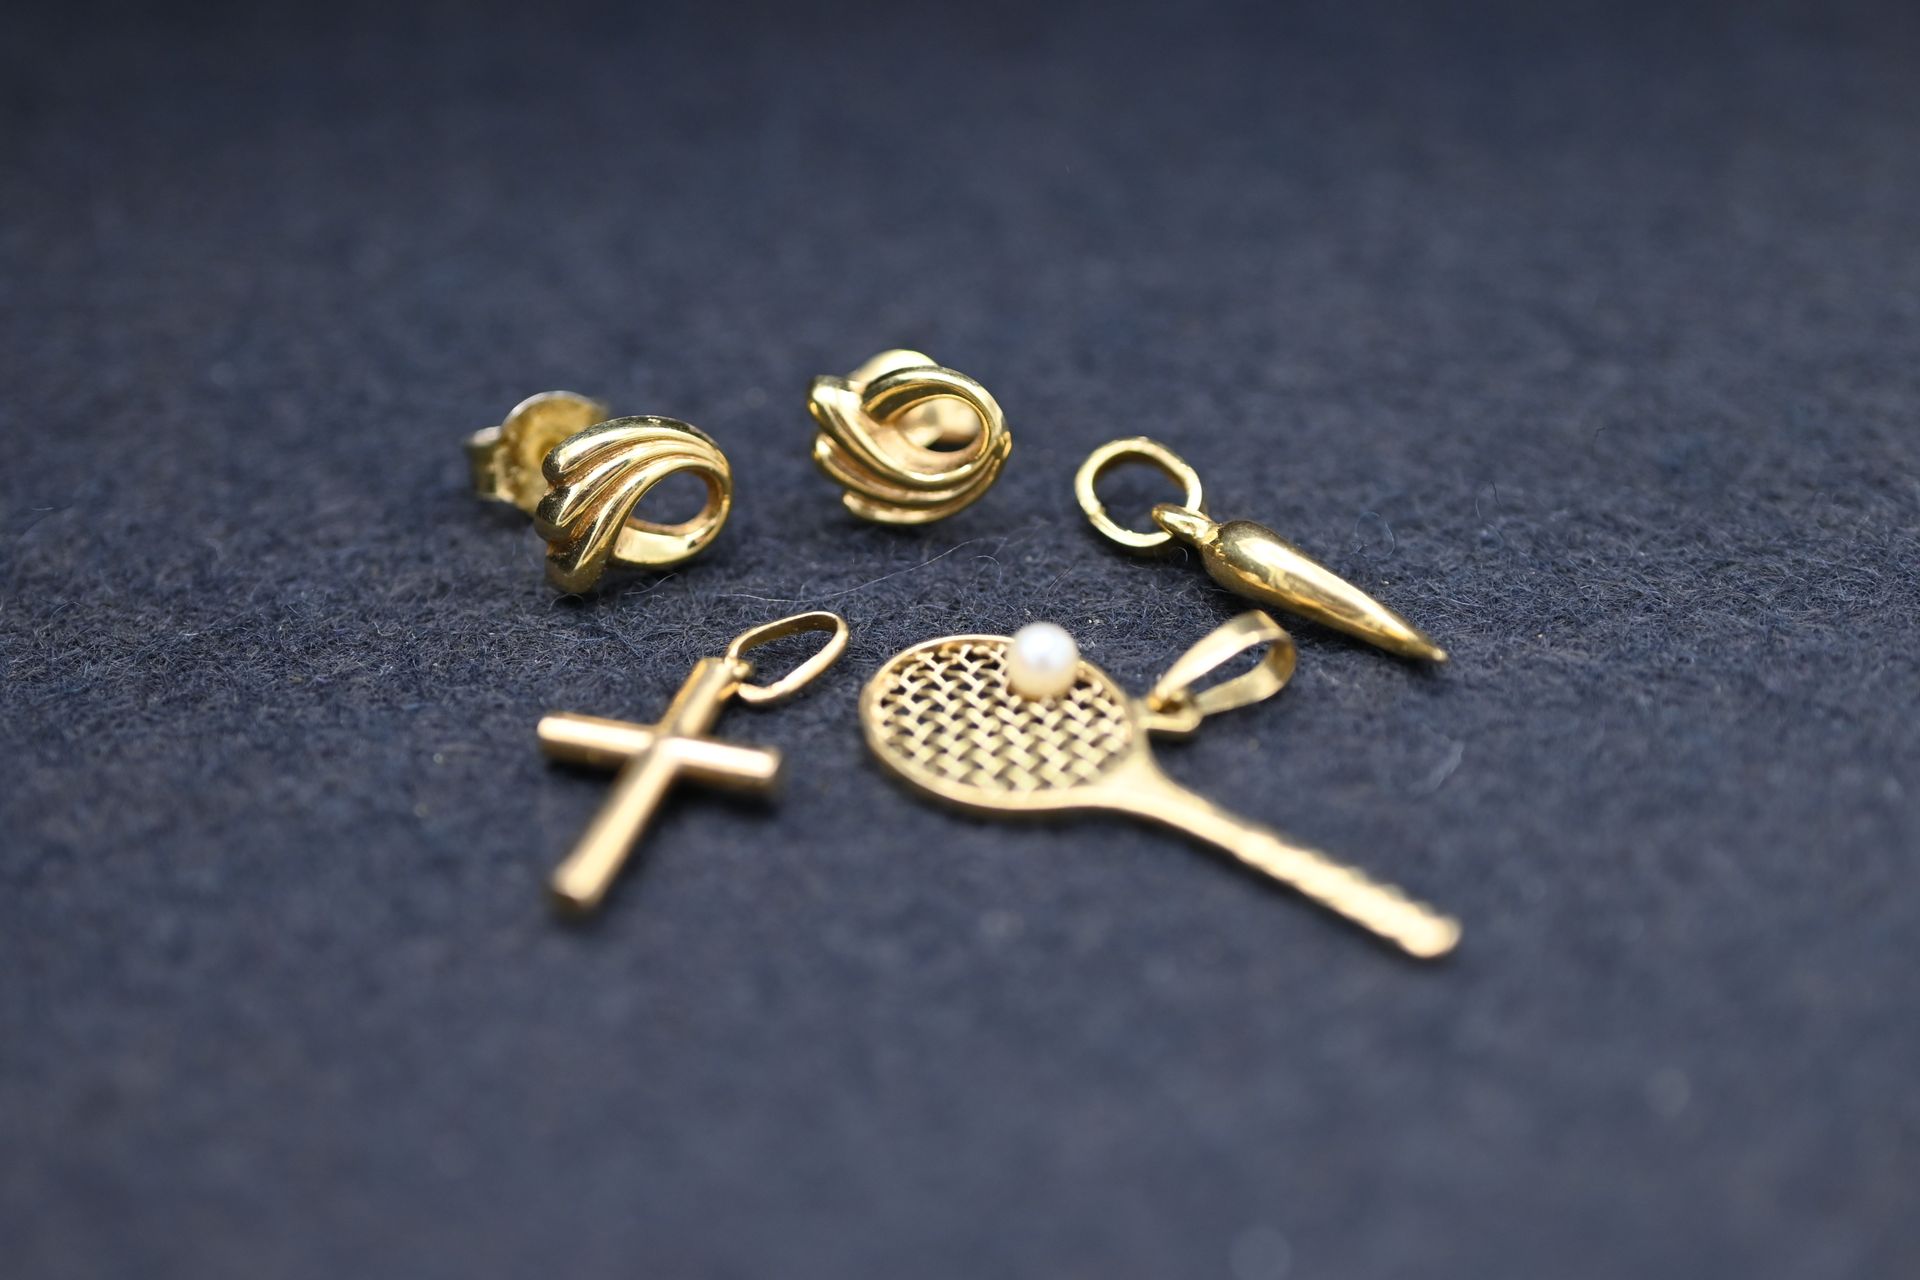 Null 一套黄金18K 750千分之一的珠宝，包括一对耳环和三个吊坠，代表一个胡椒，一个十字架和一个球拍，装饰着小珍珠。
毛重：3克